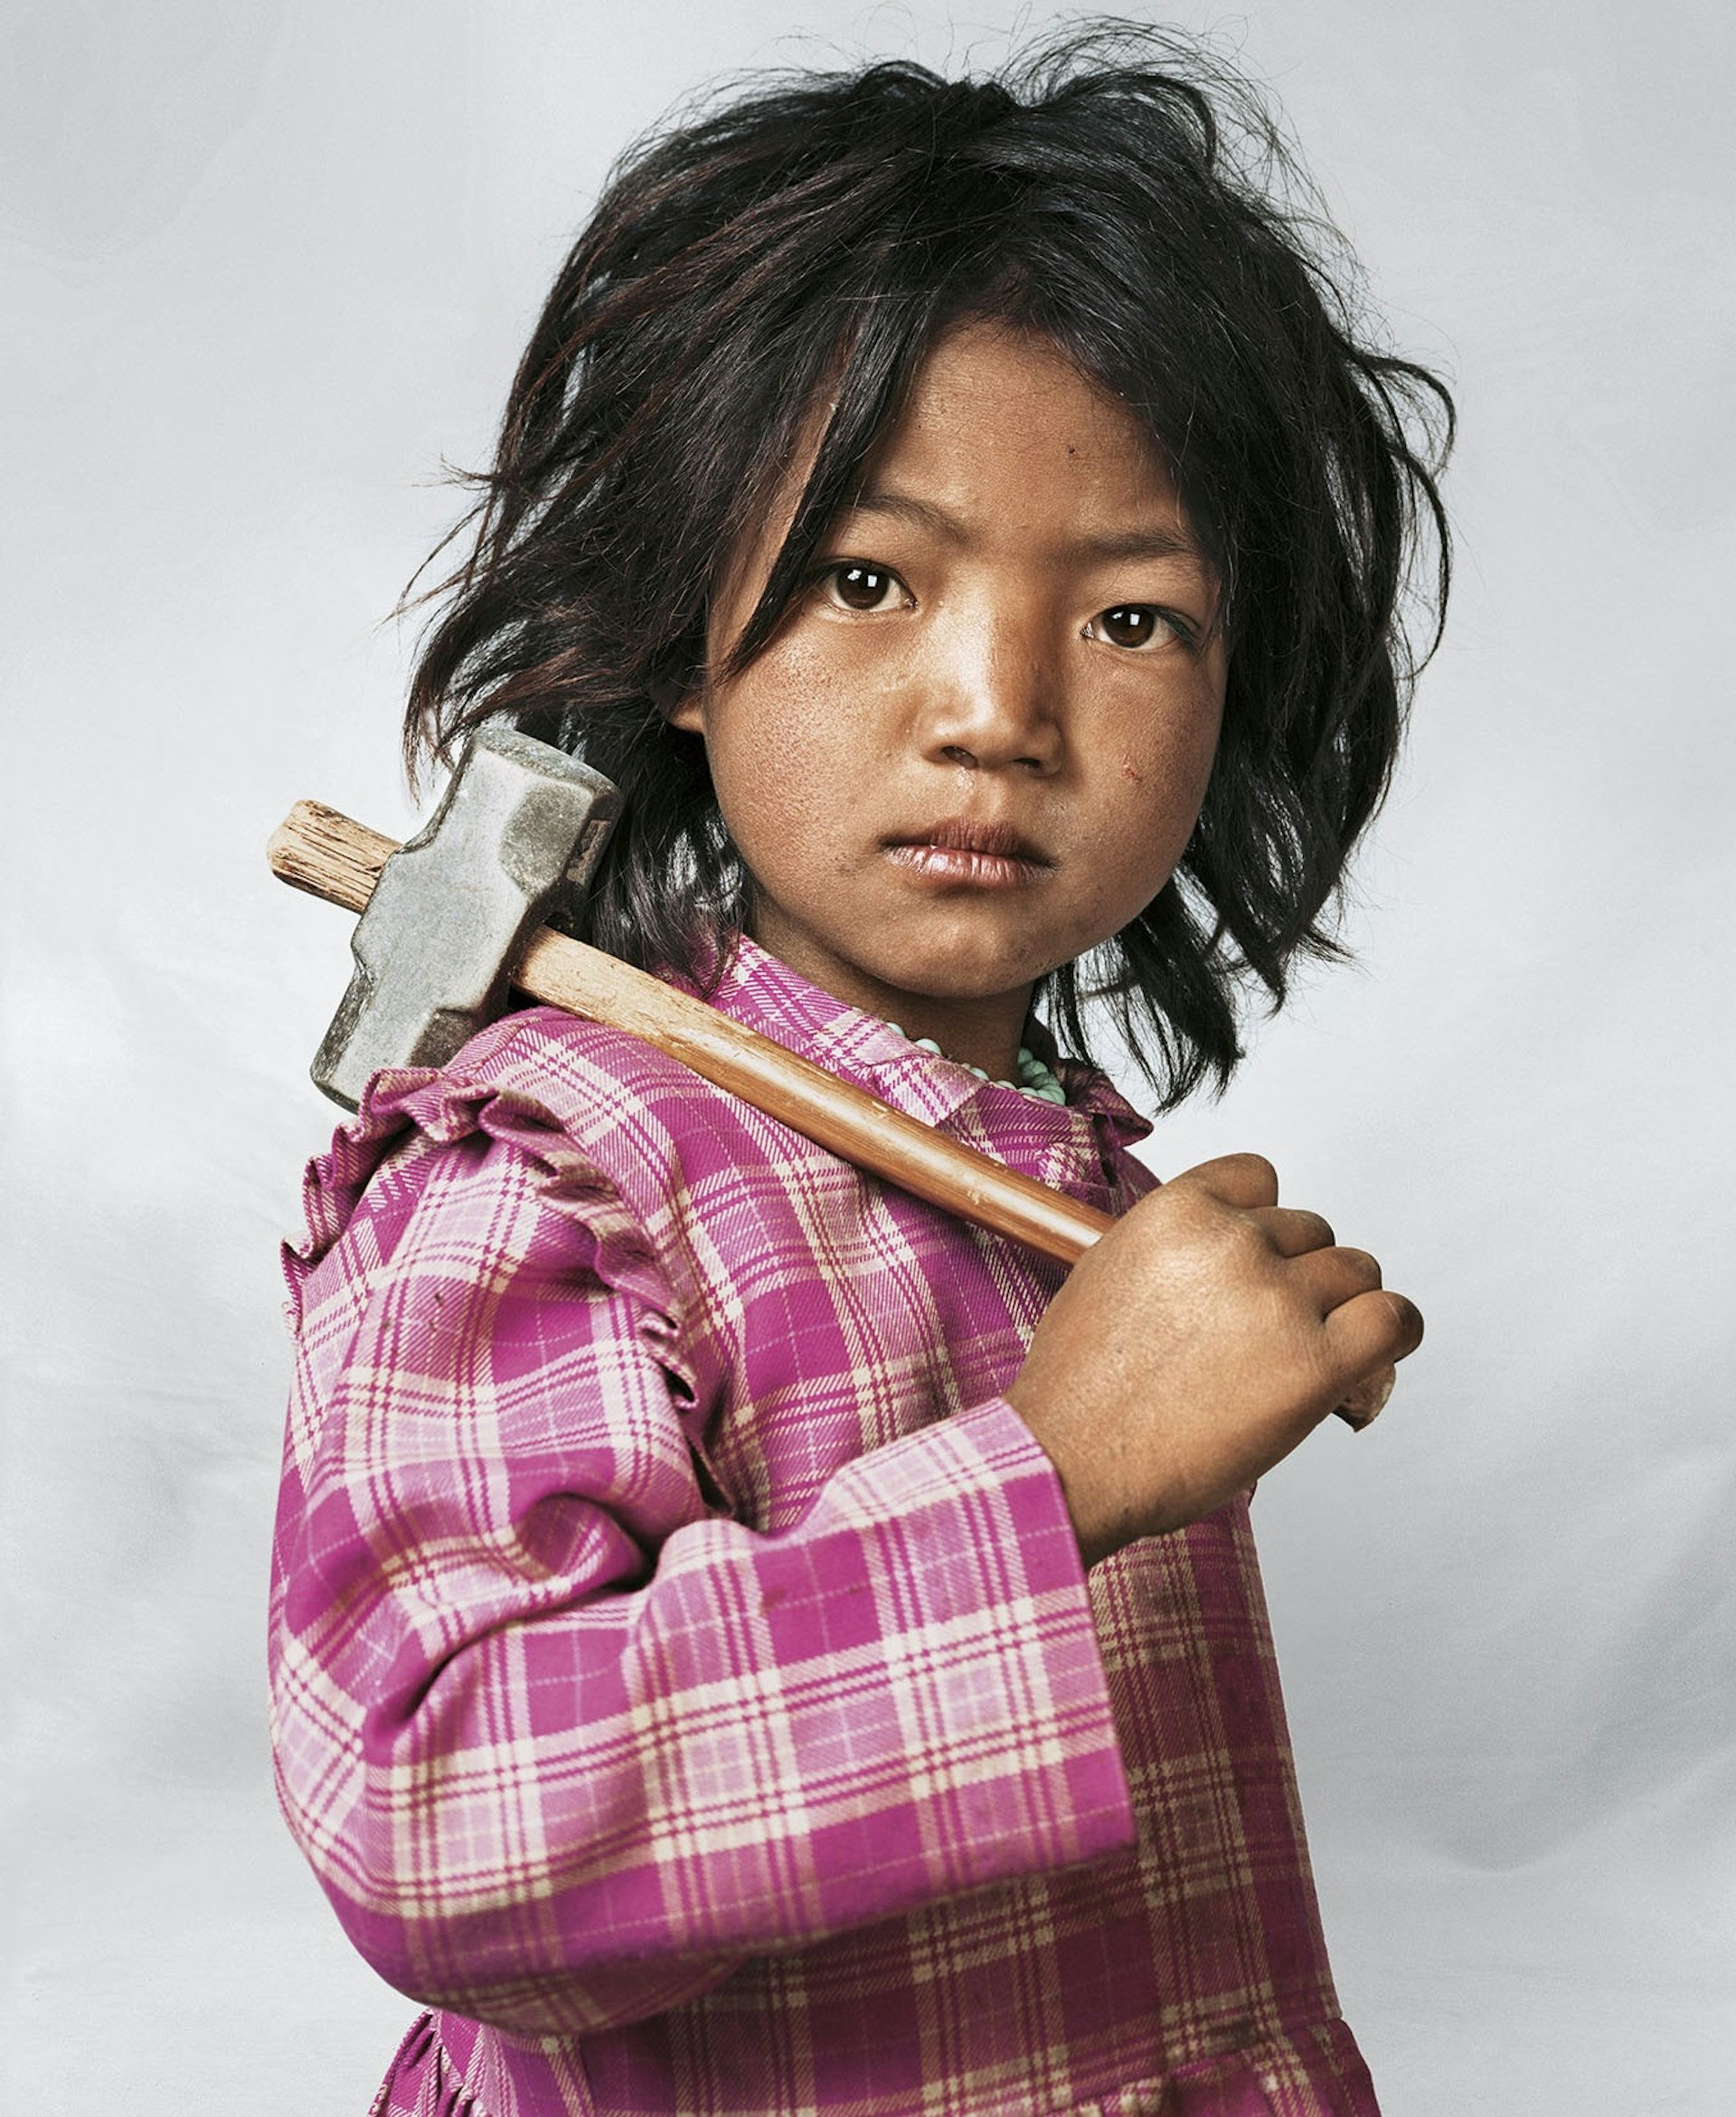 Indira. Kathmandu, Nepal. March, 2007 © James Mollison courtesy Aperture